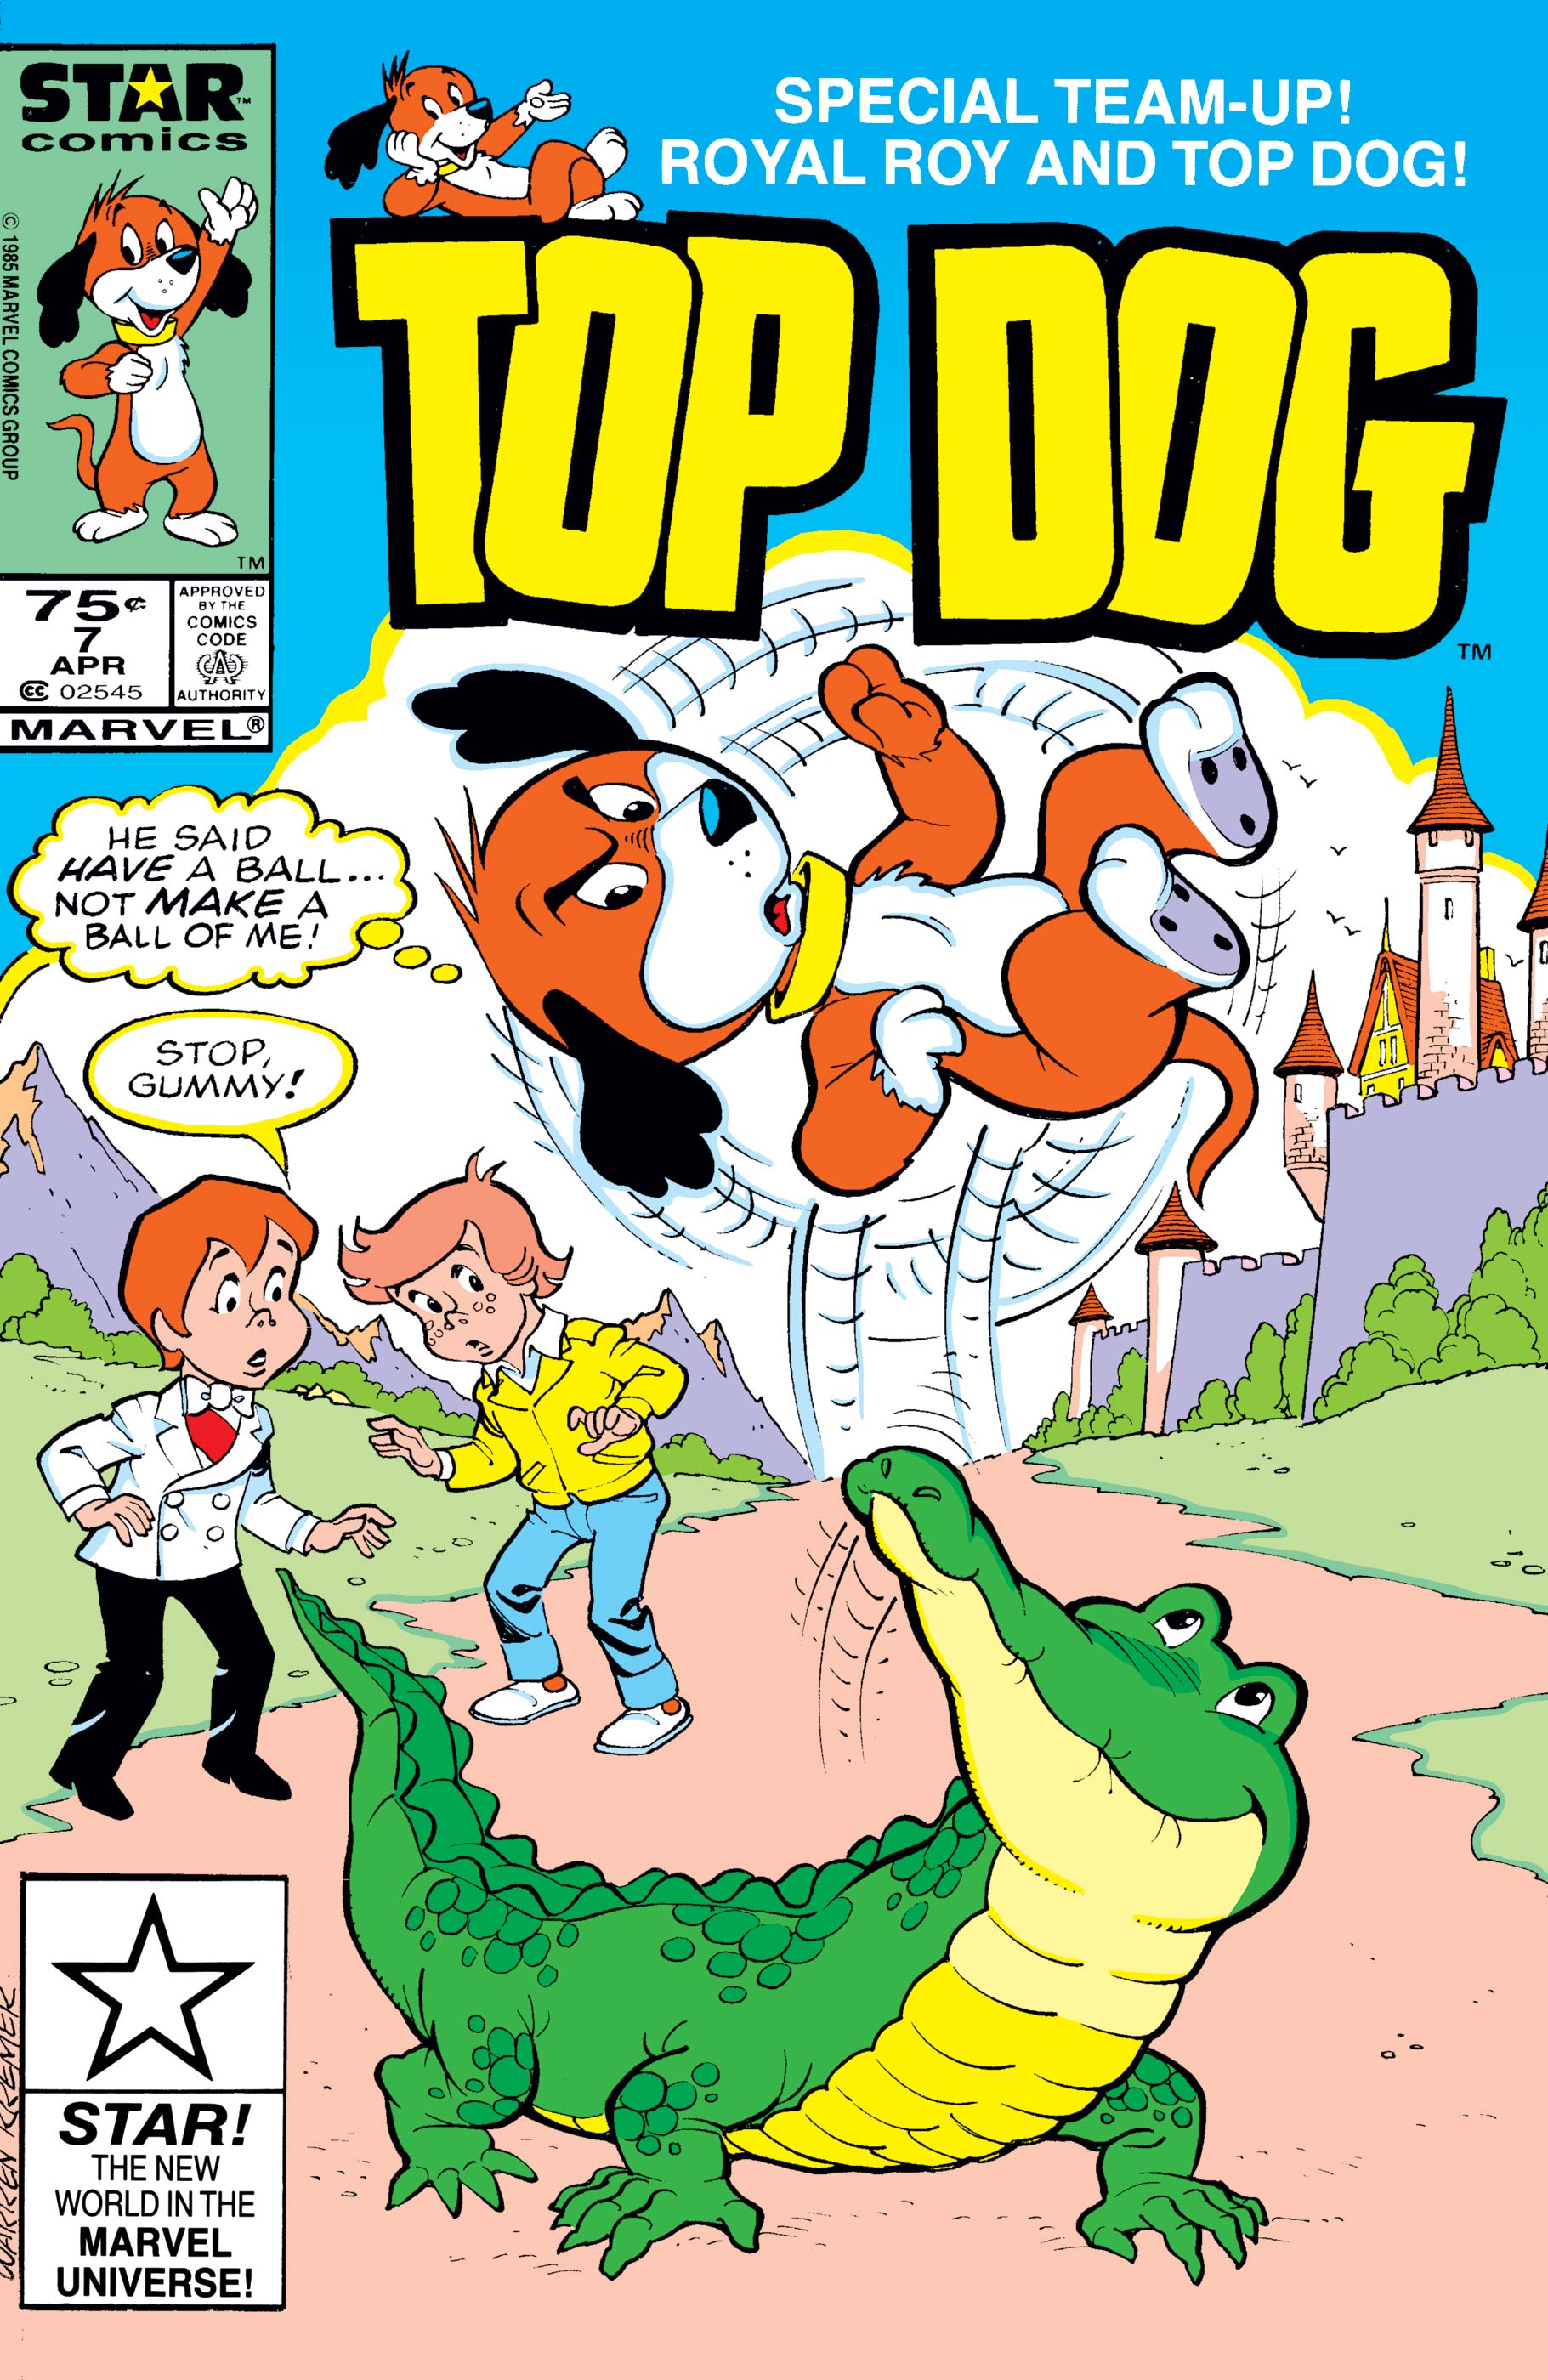 Top Dog (1985) #7